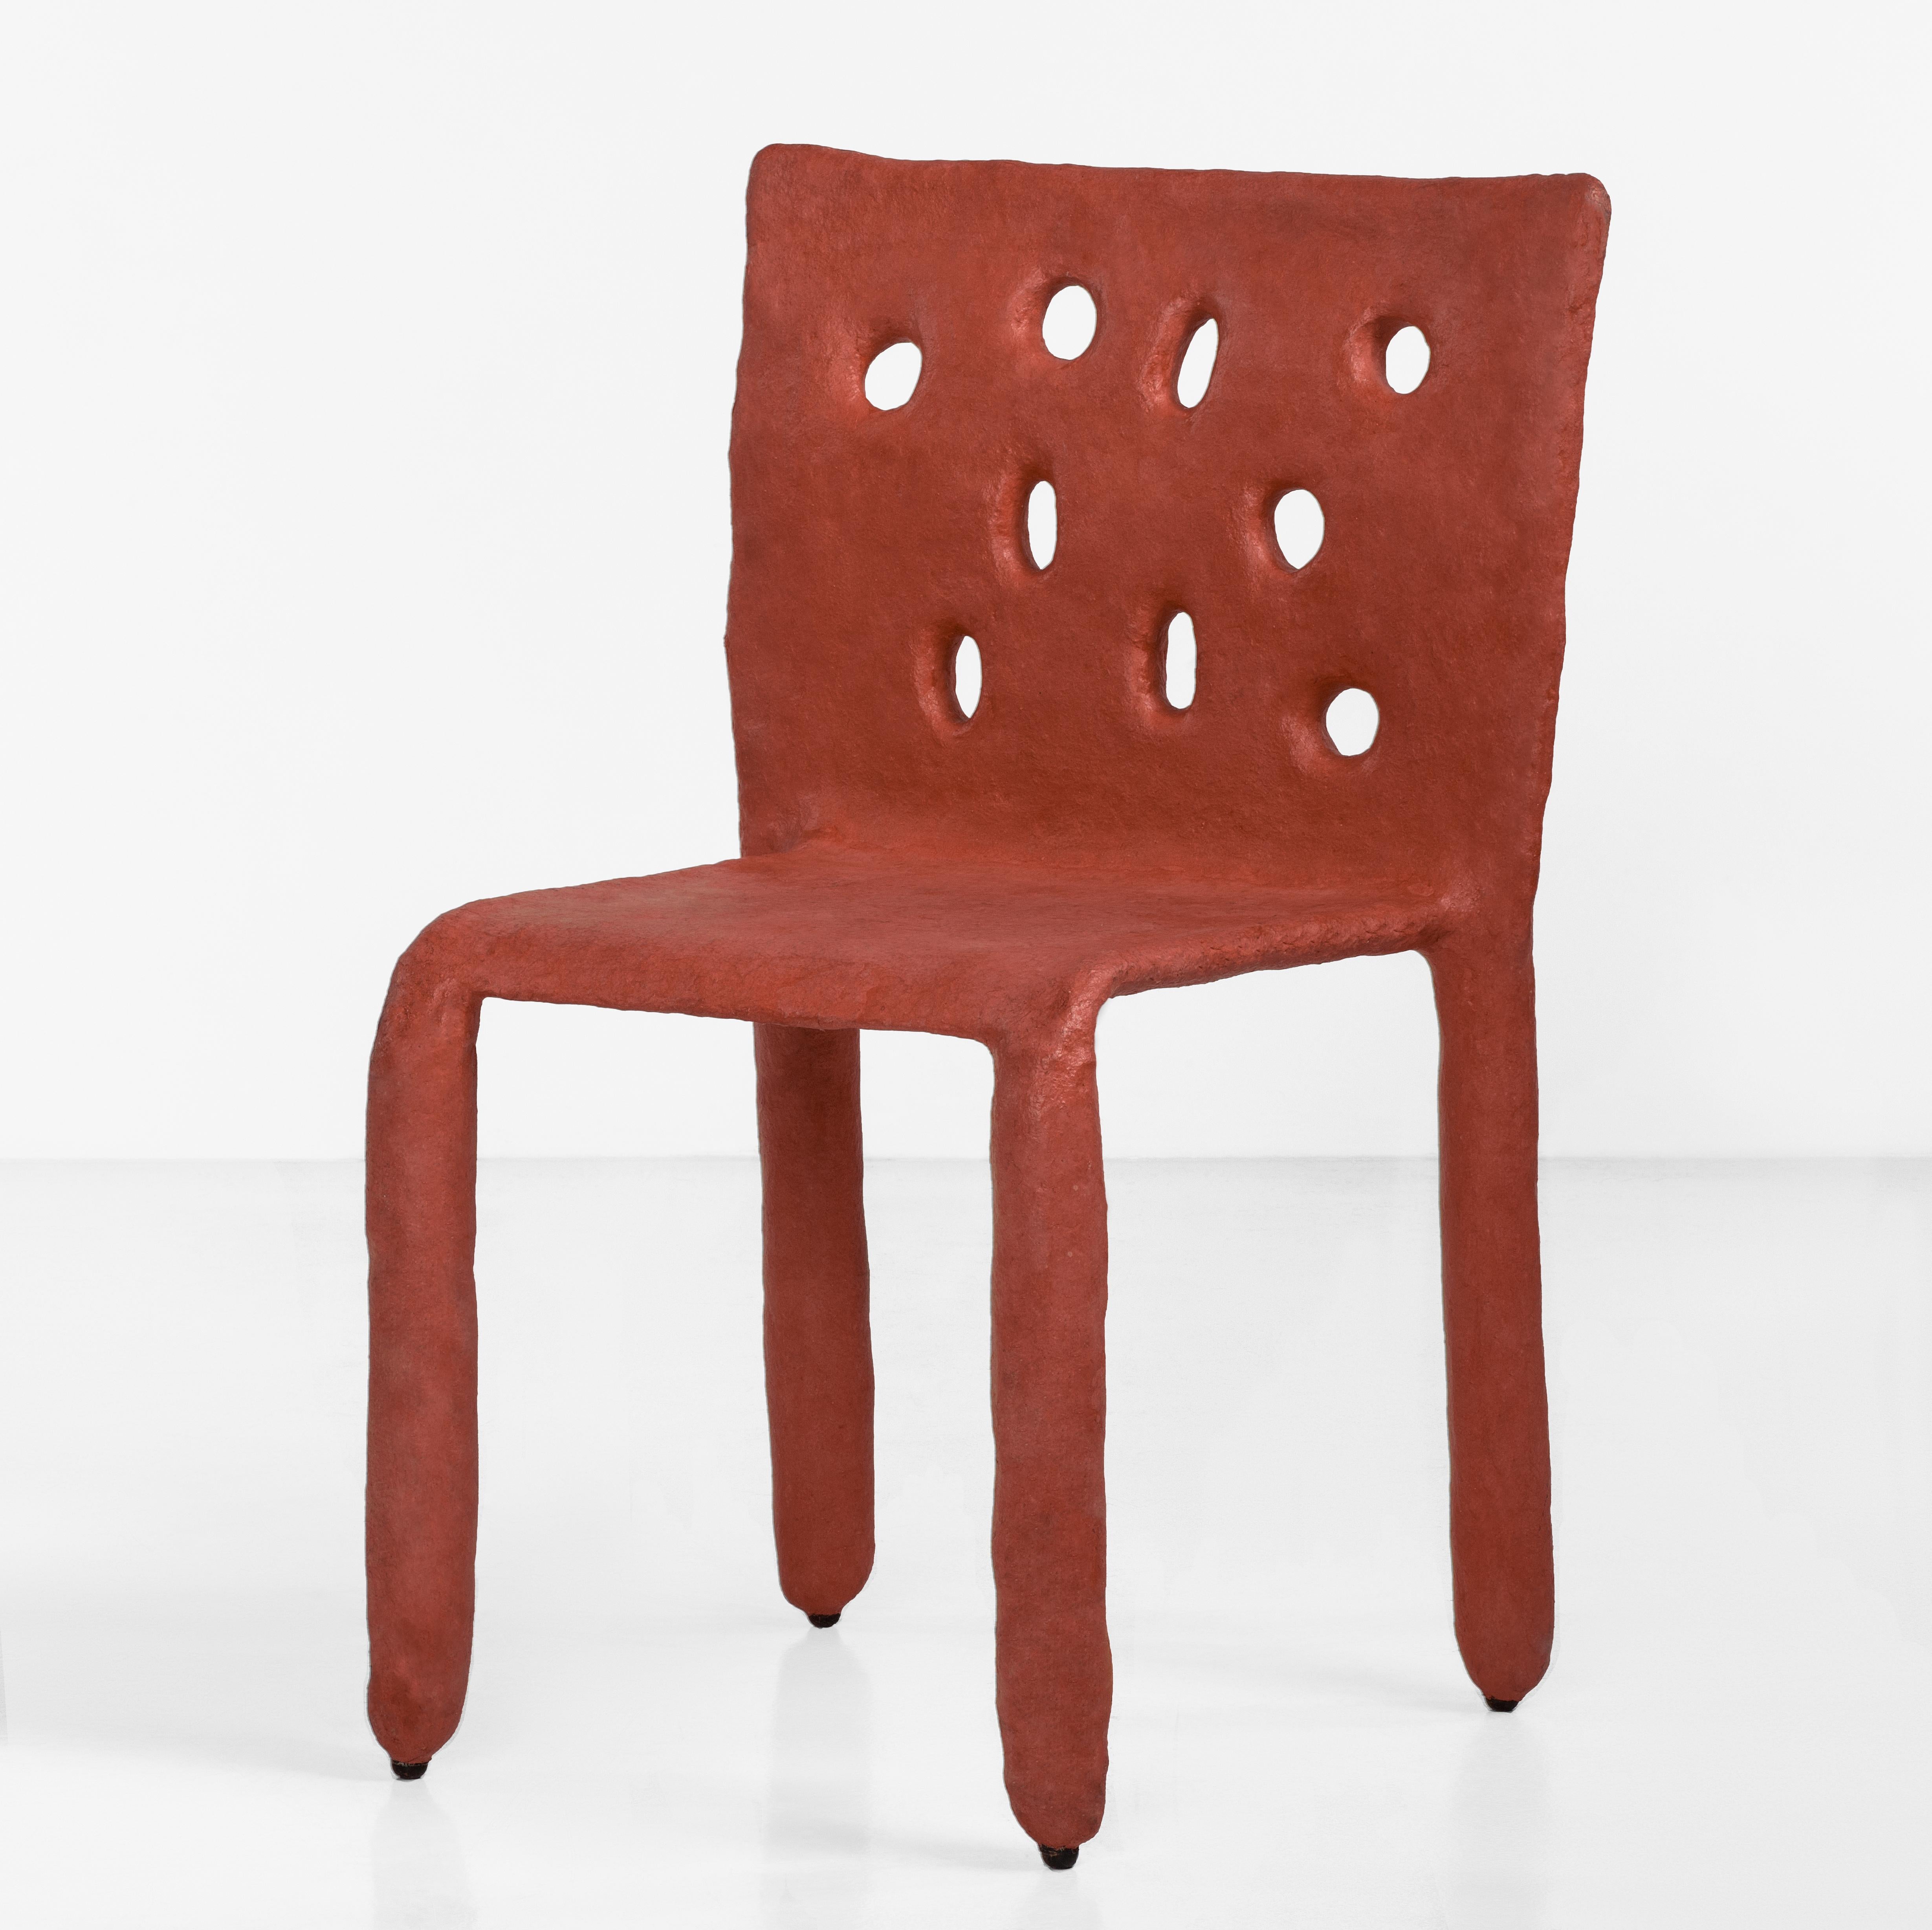 Orange Sculpted Contemporary Chair by FAINA 2